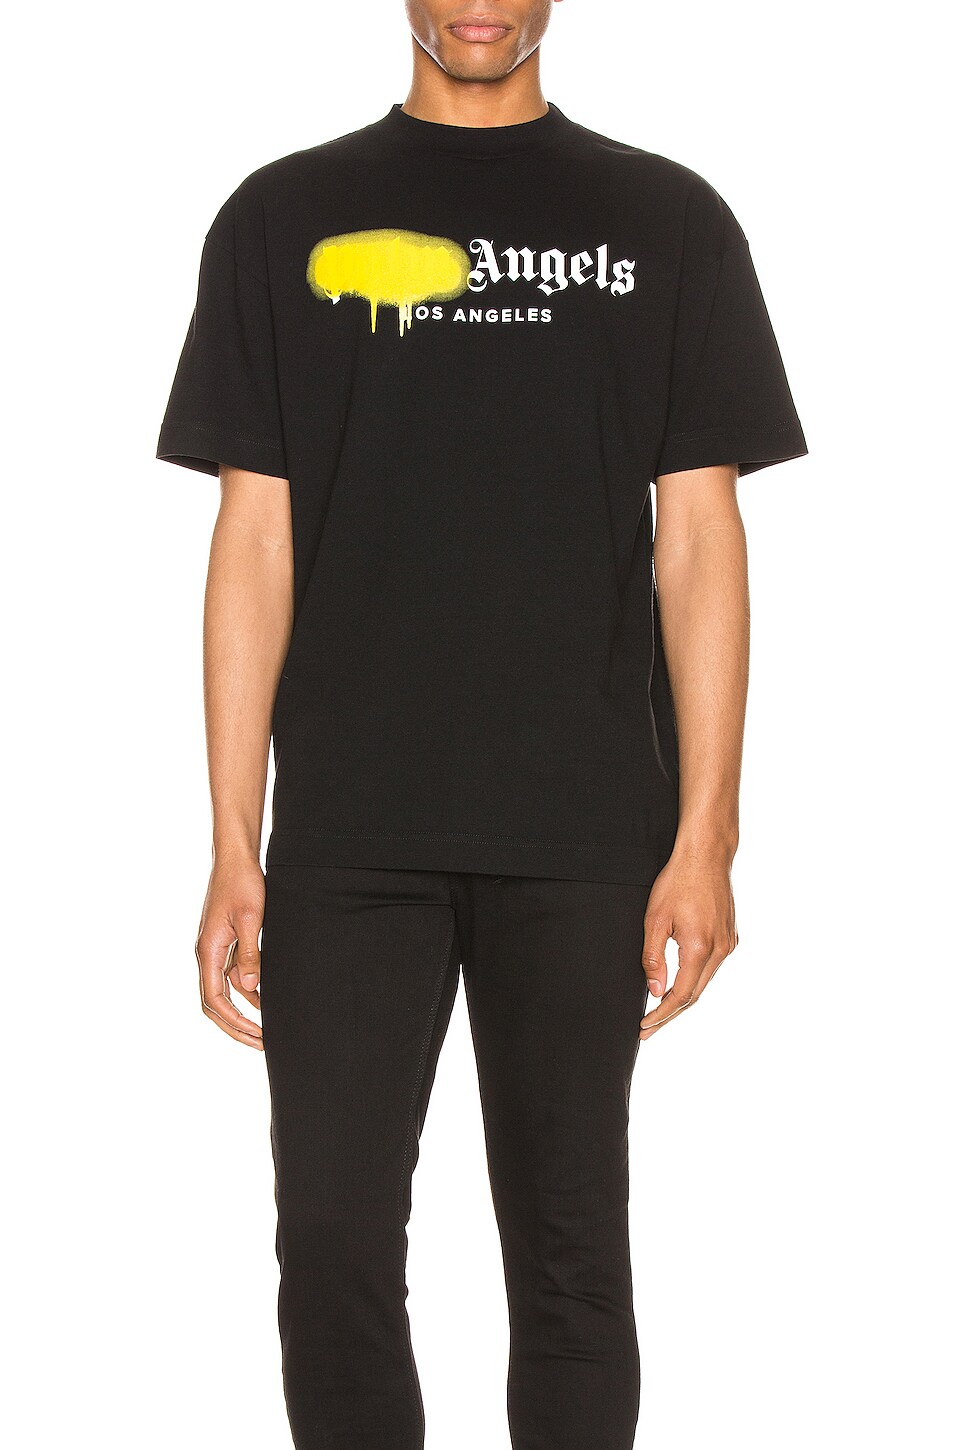 palm angels logo shirt